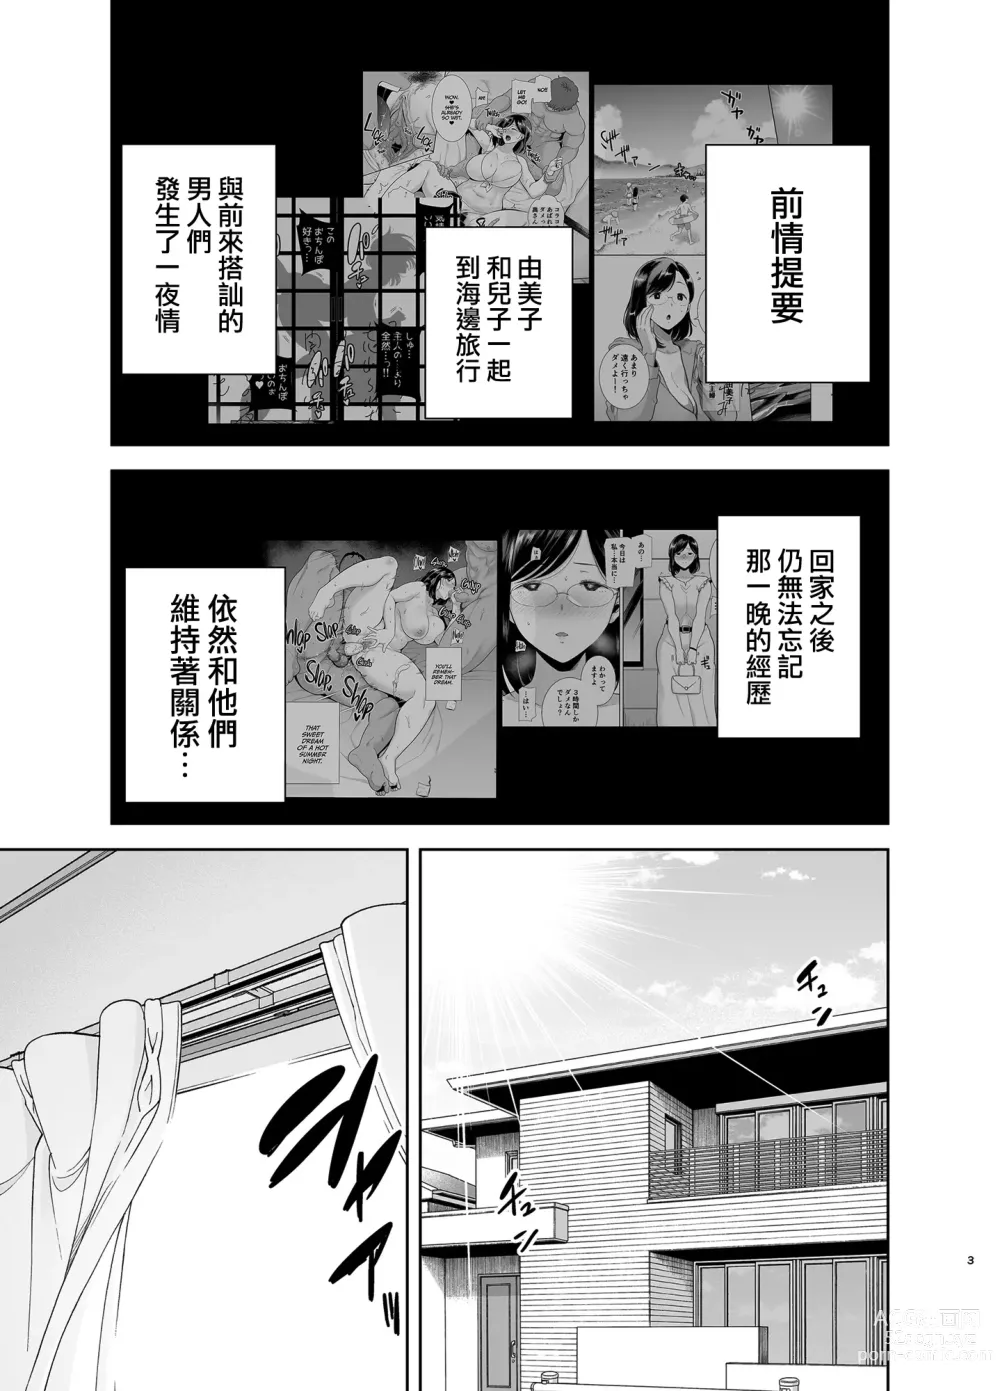 Page 2 of doujinshi sdasd